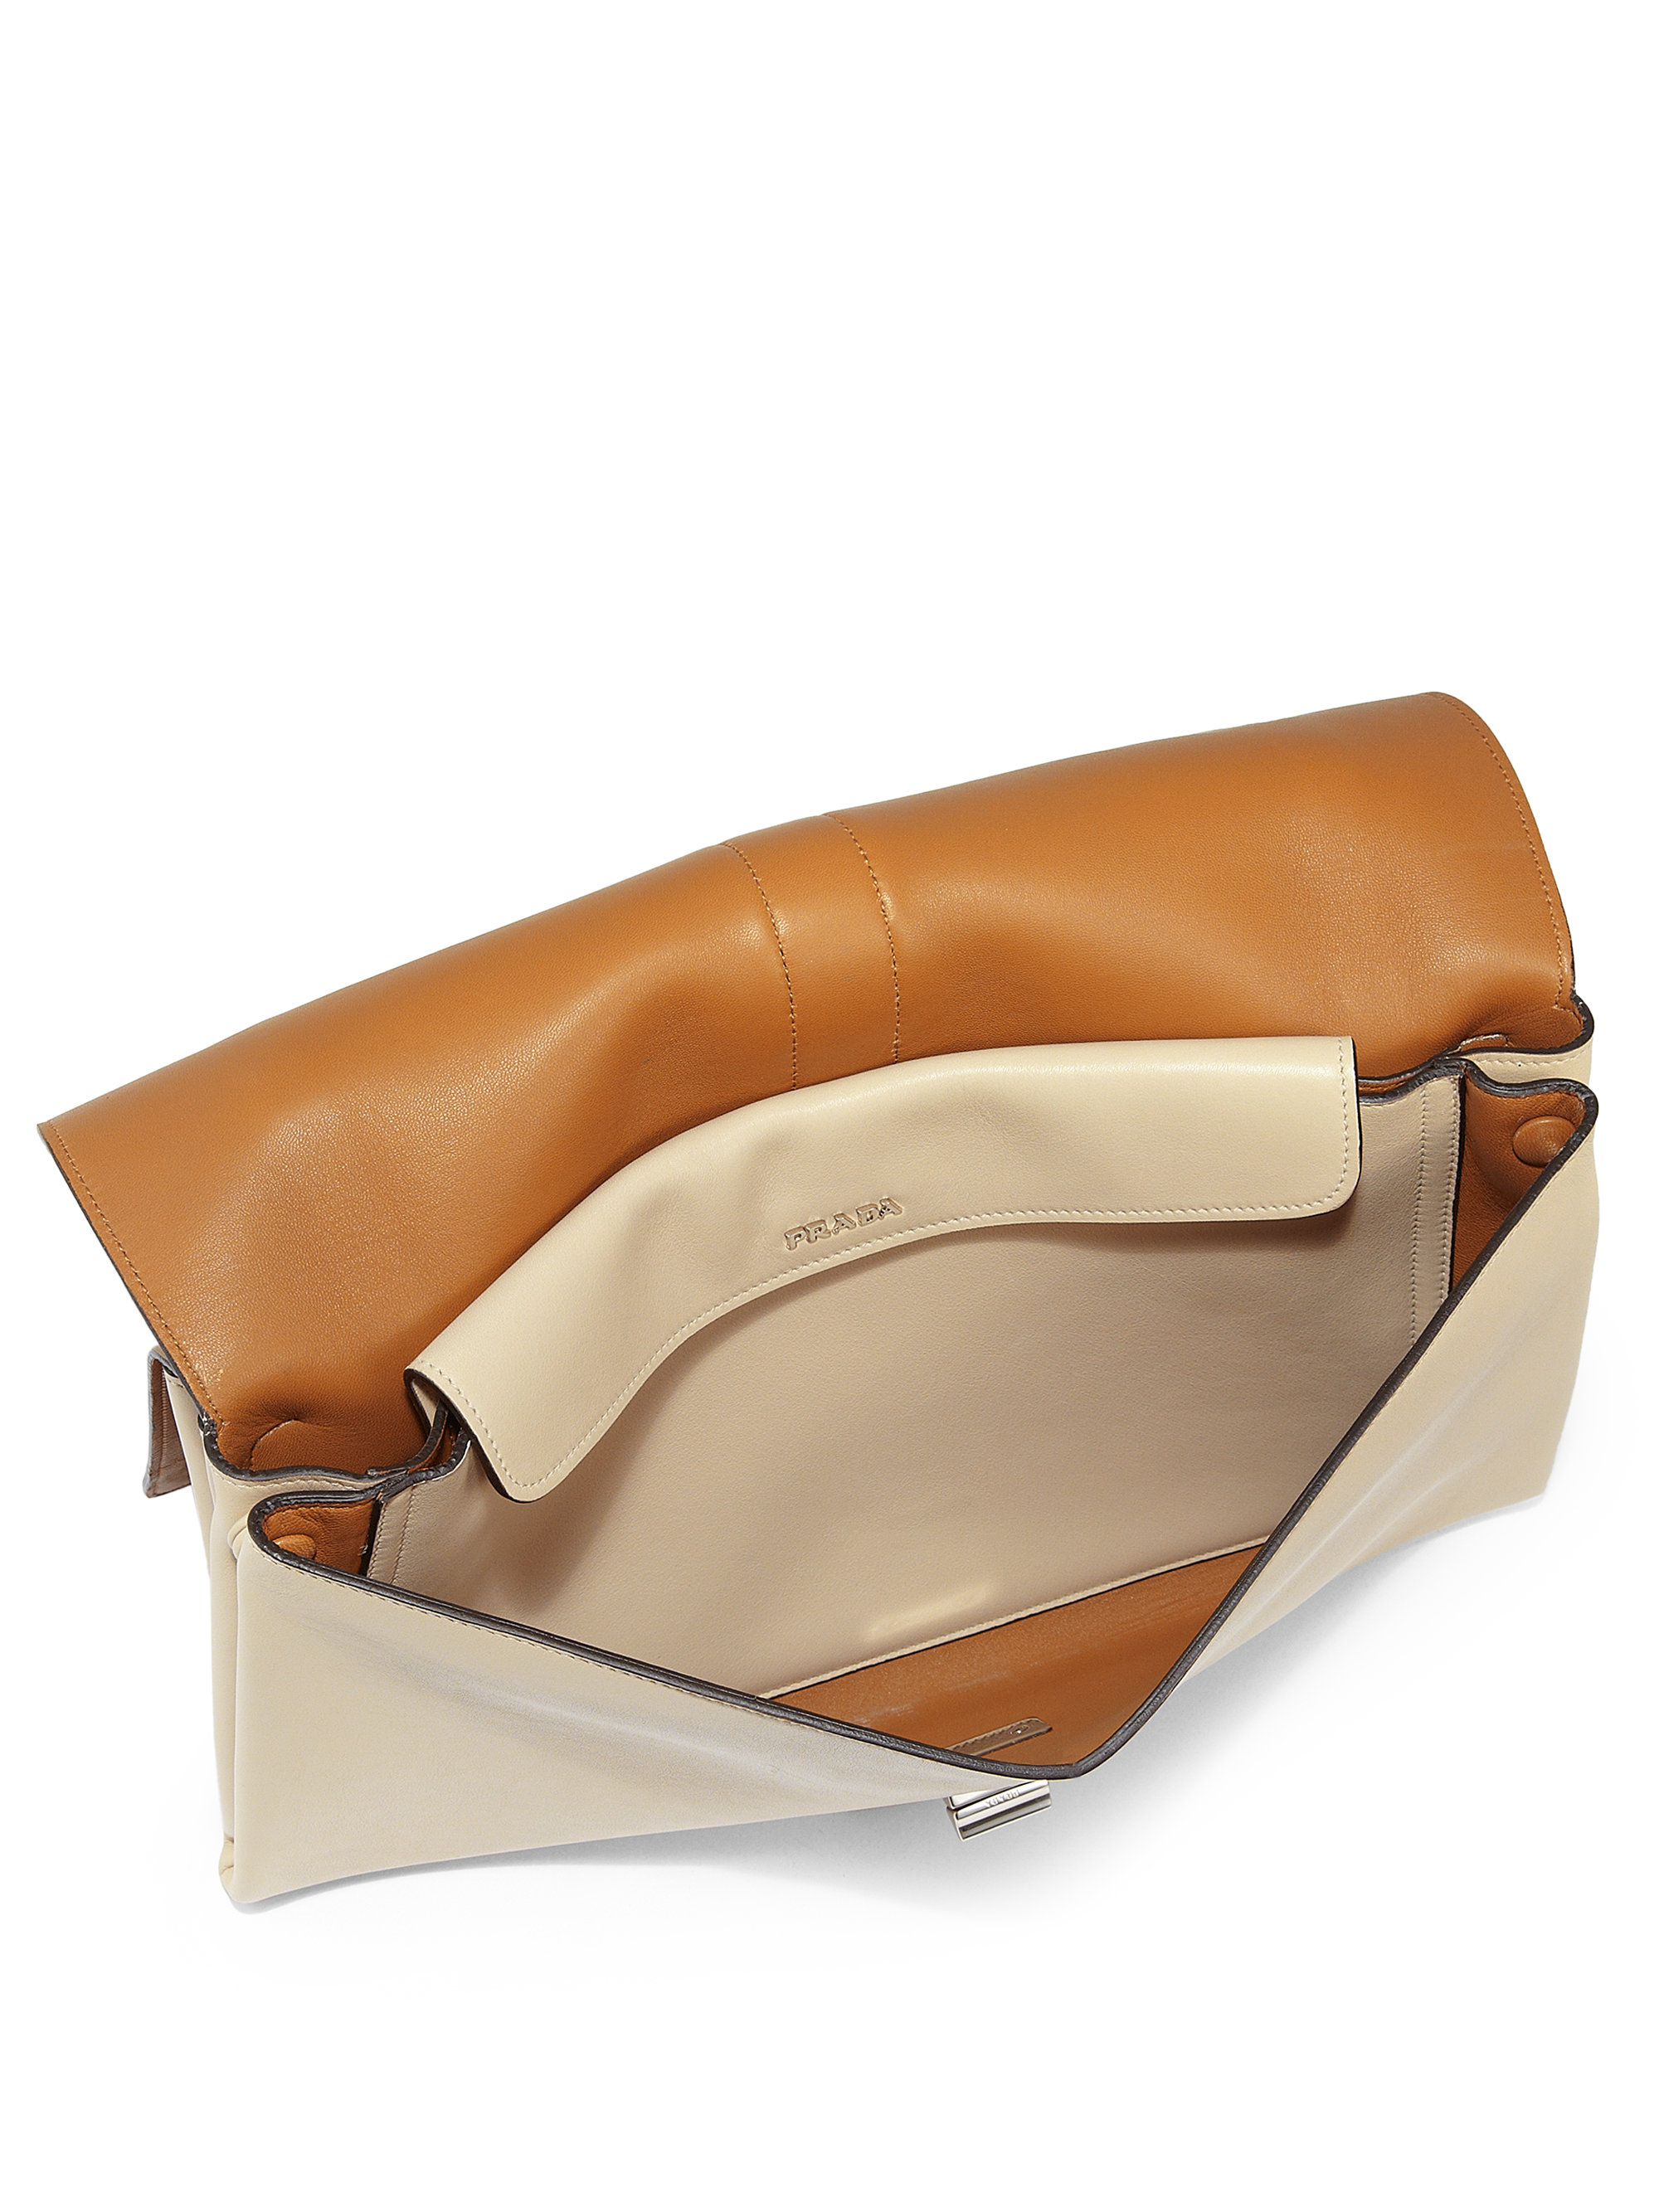 Prada Vitello Soft Double Shoulder Bag in Beige (CREAM-TAN) | Lyst  